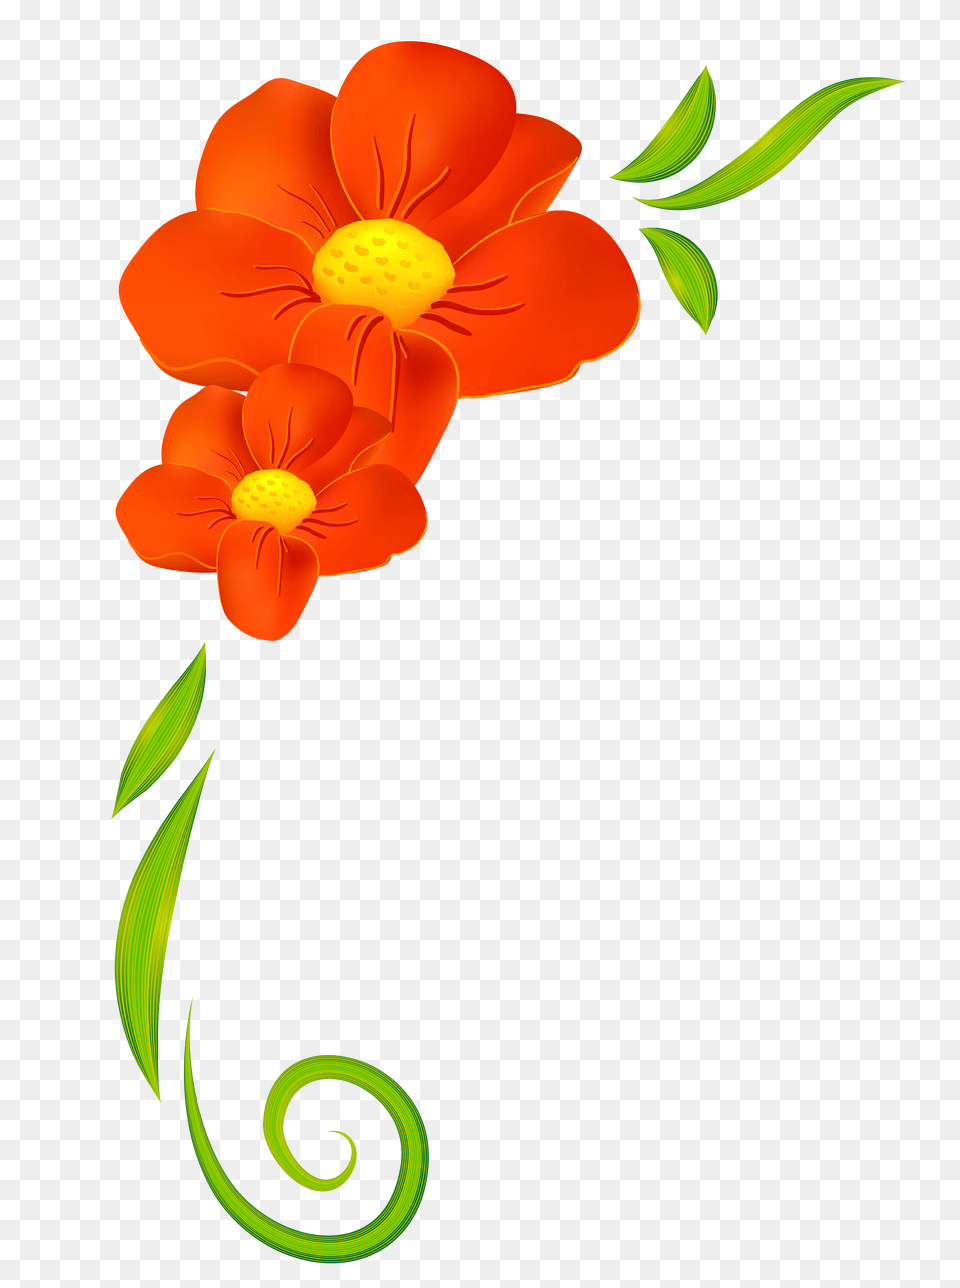 Result For Clipart Spring Flowers Flowers, Art, Floral Design, Flower, Graphics Png